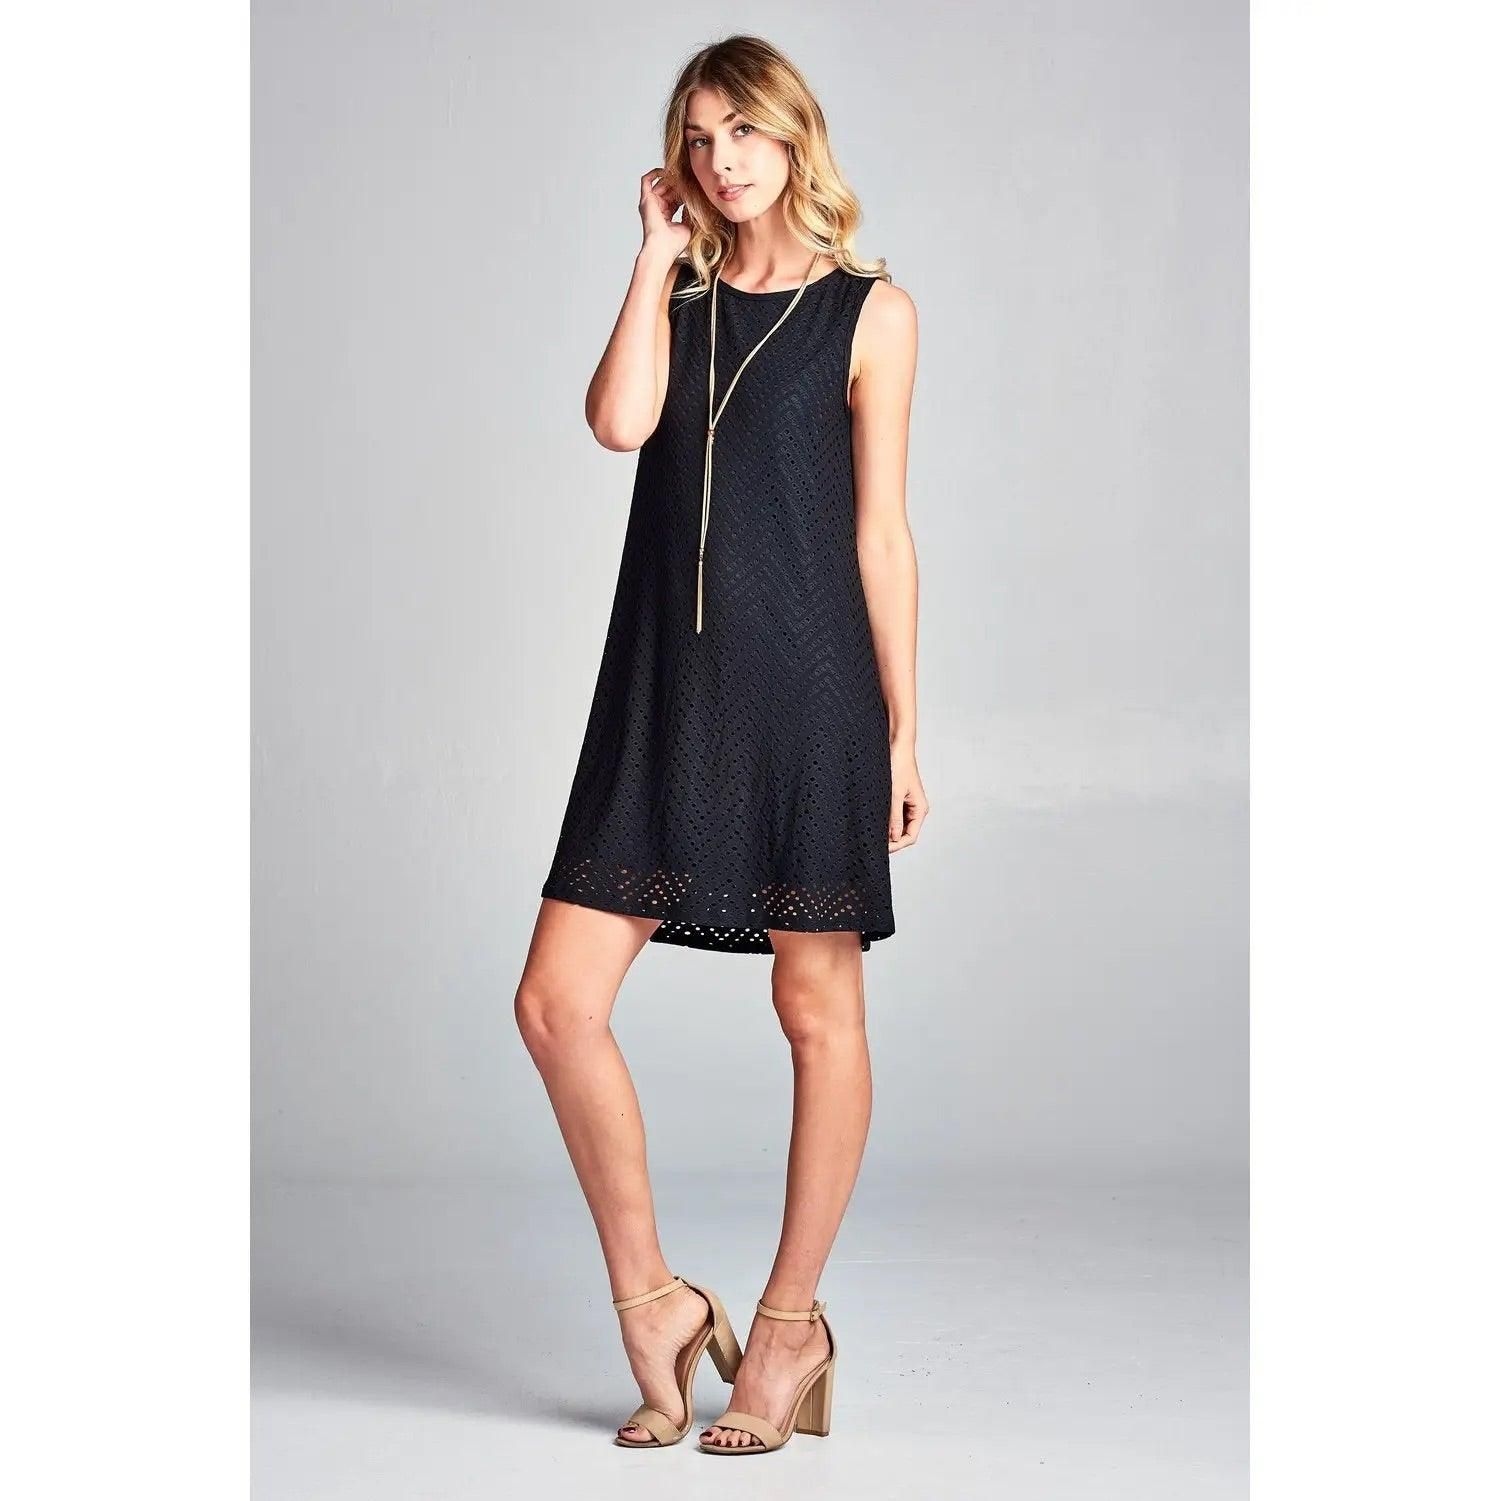 Vivid Solid Sleeveless Mini Modern Short Dress - BTK COLLECTION